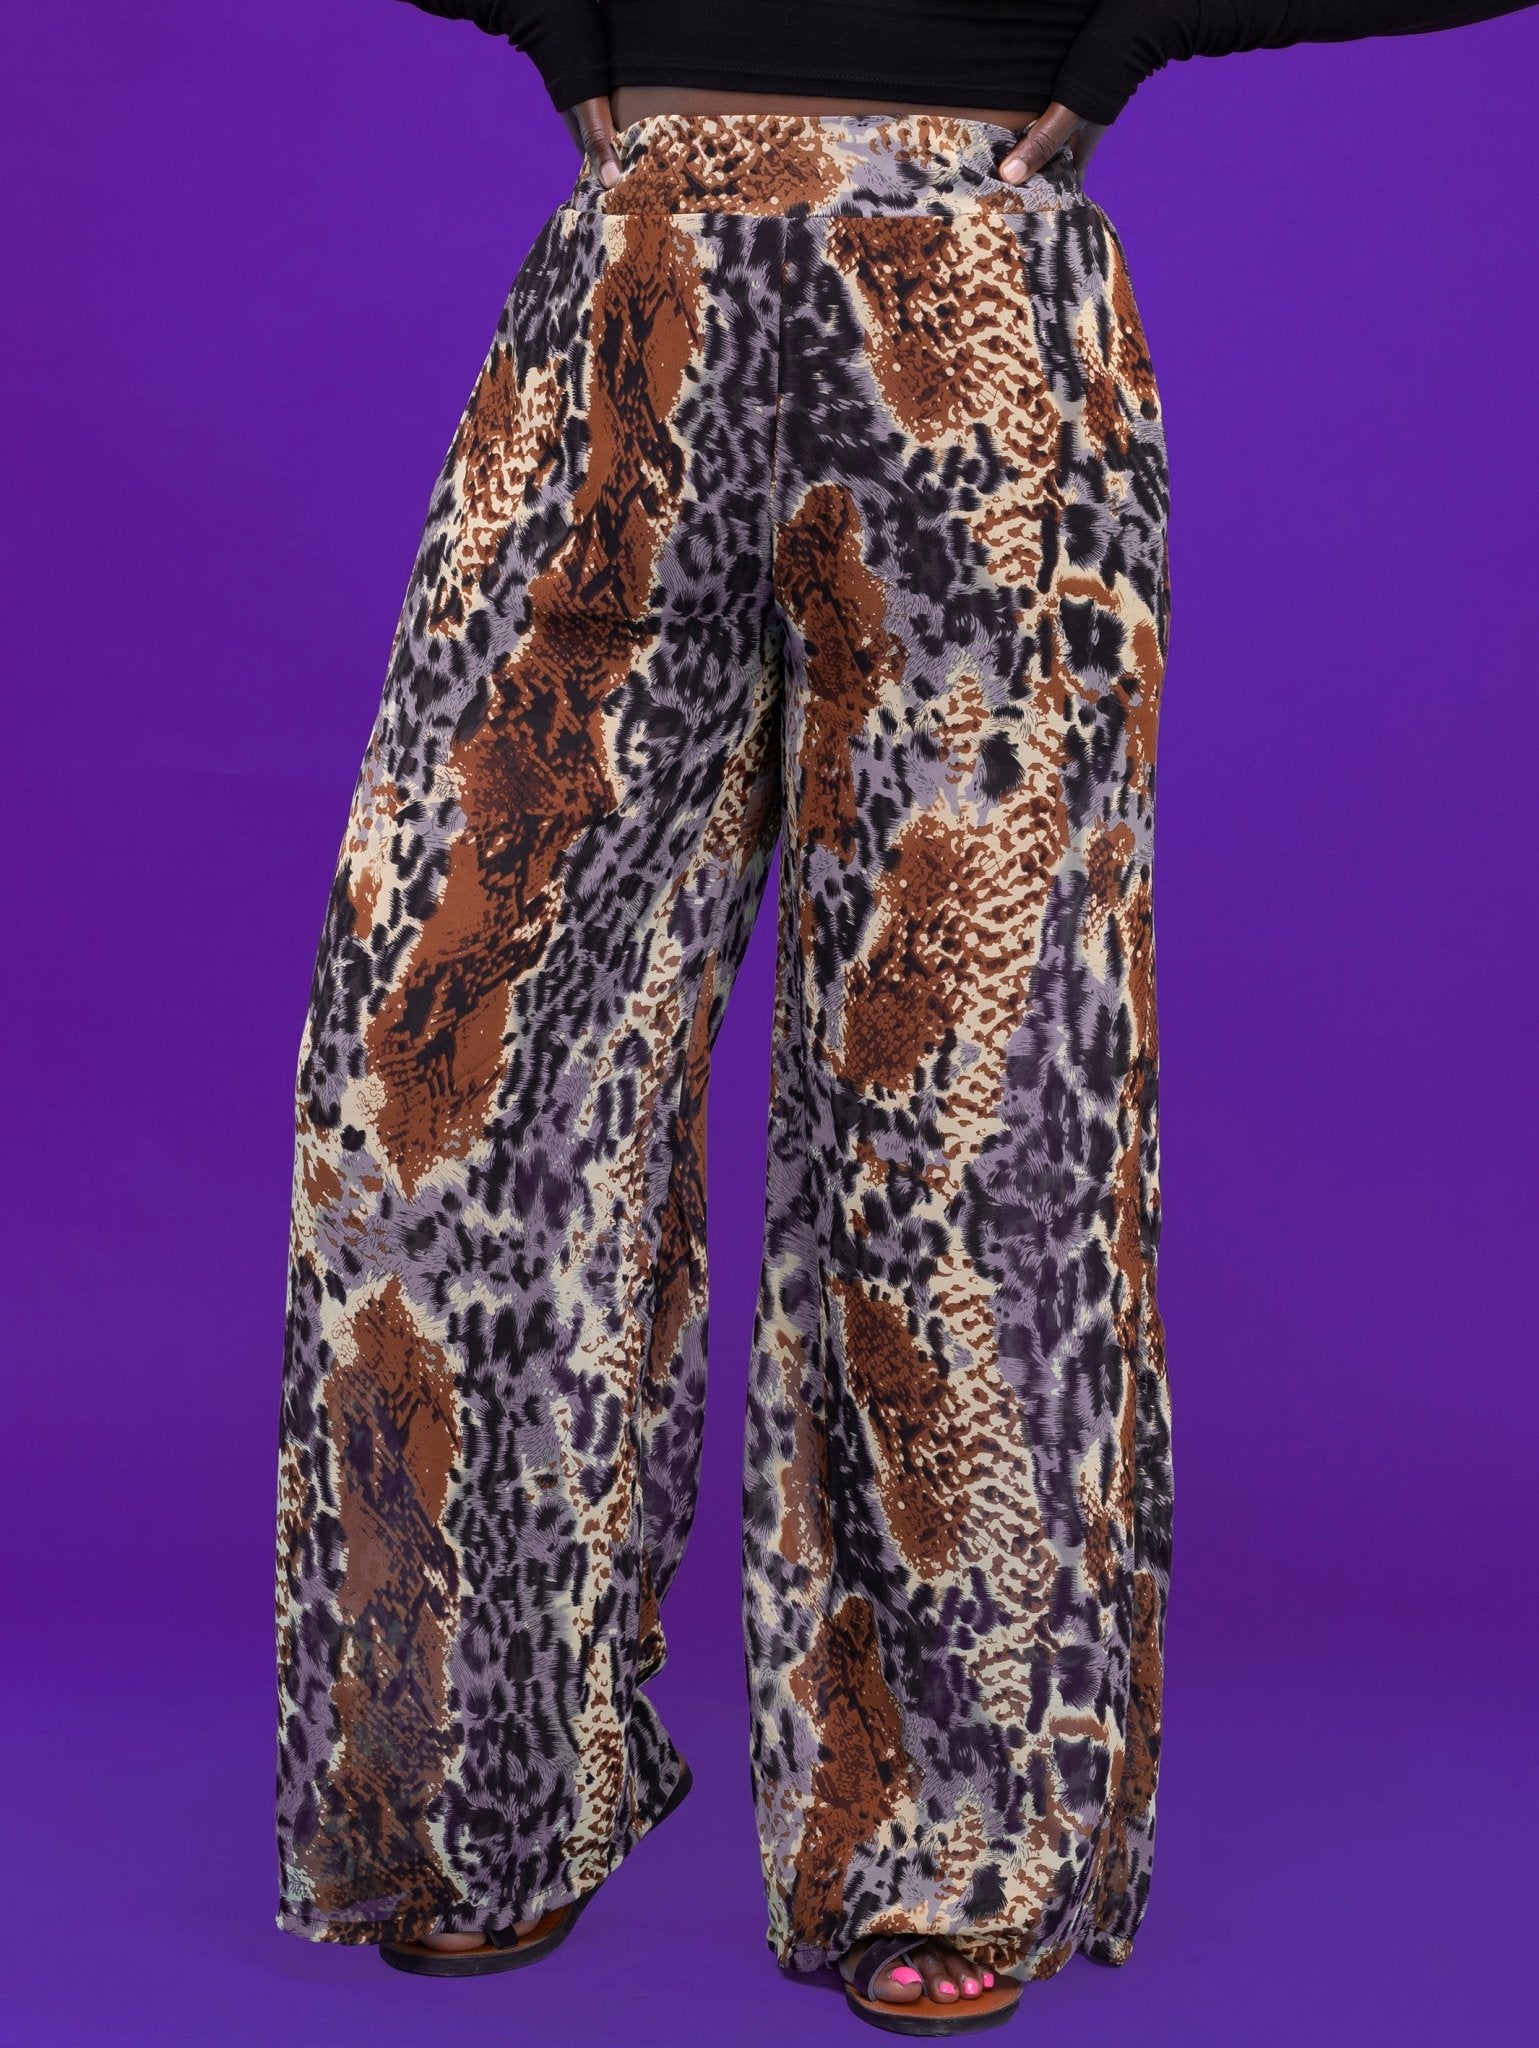 Leopard Print Palazzo Pants, Palazzo Pants, African Print Pants, Ankara  Pants, African Clothing For Women, Wide Bottom Pants, Leopard Pants